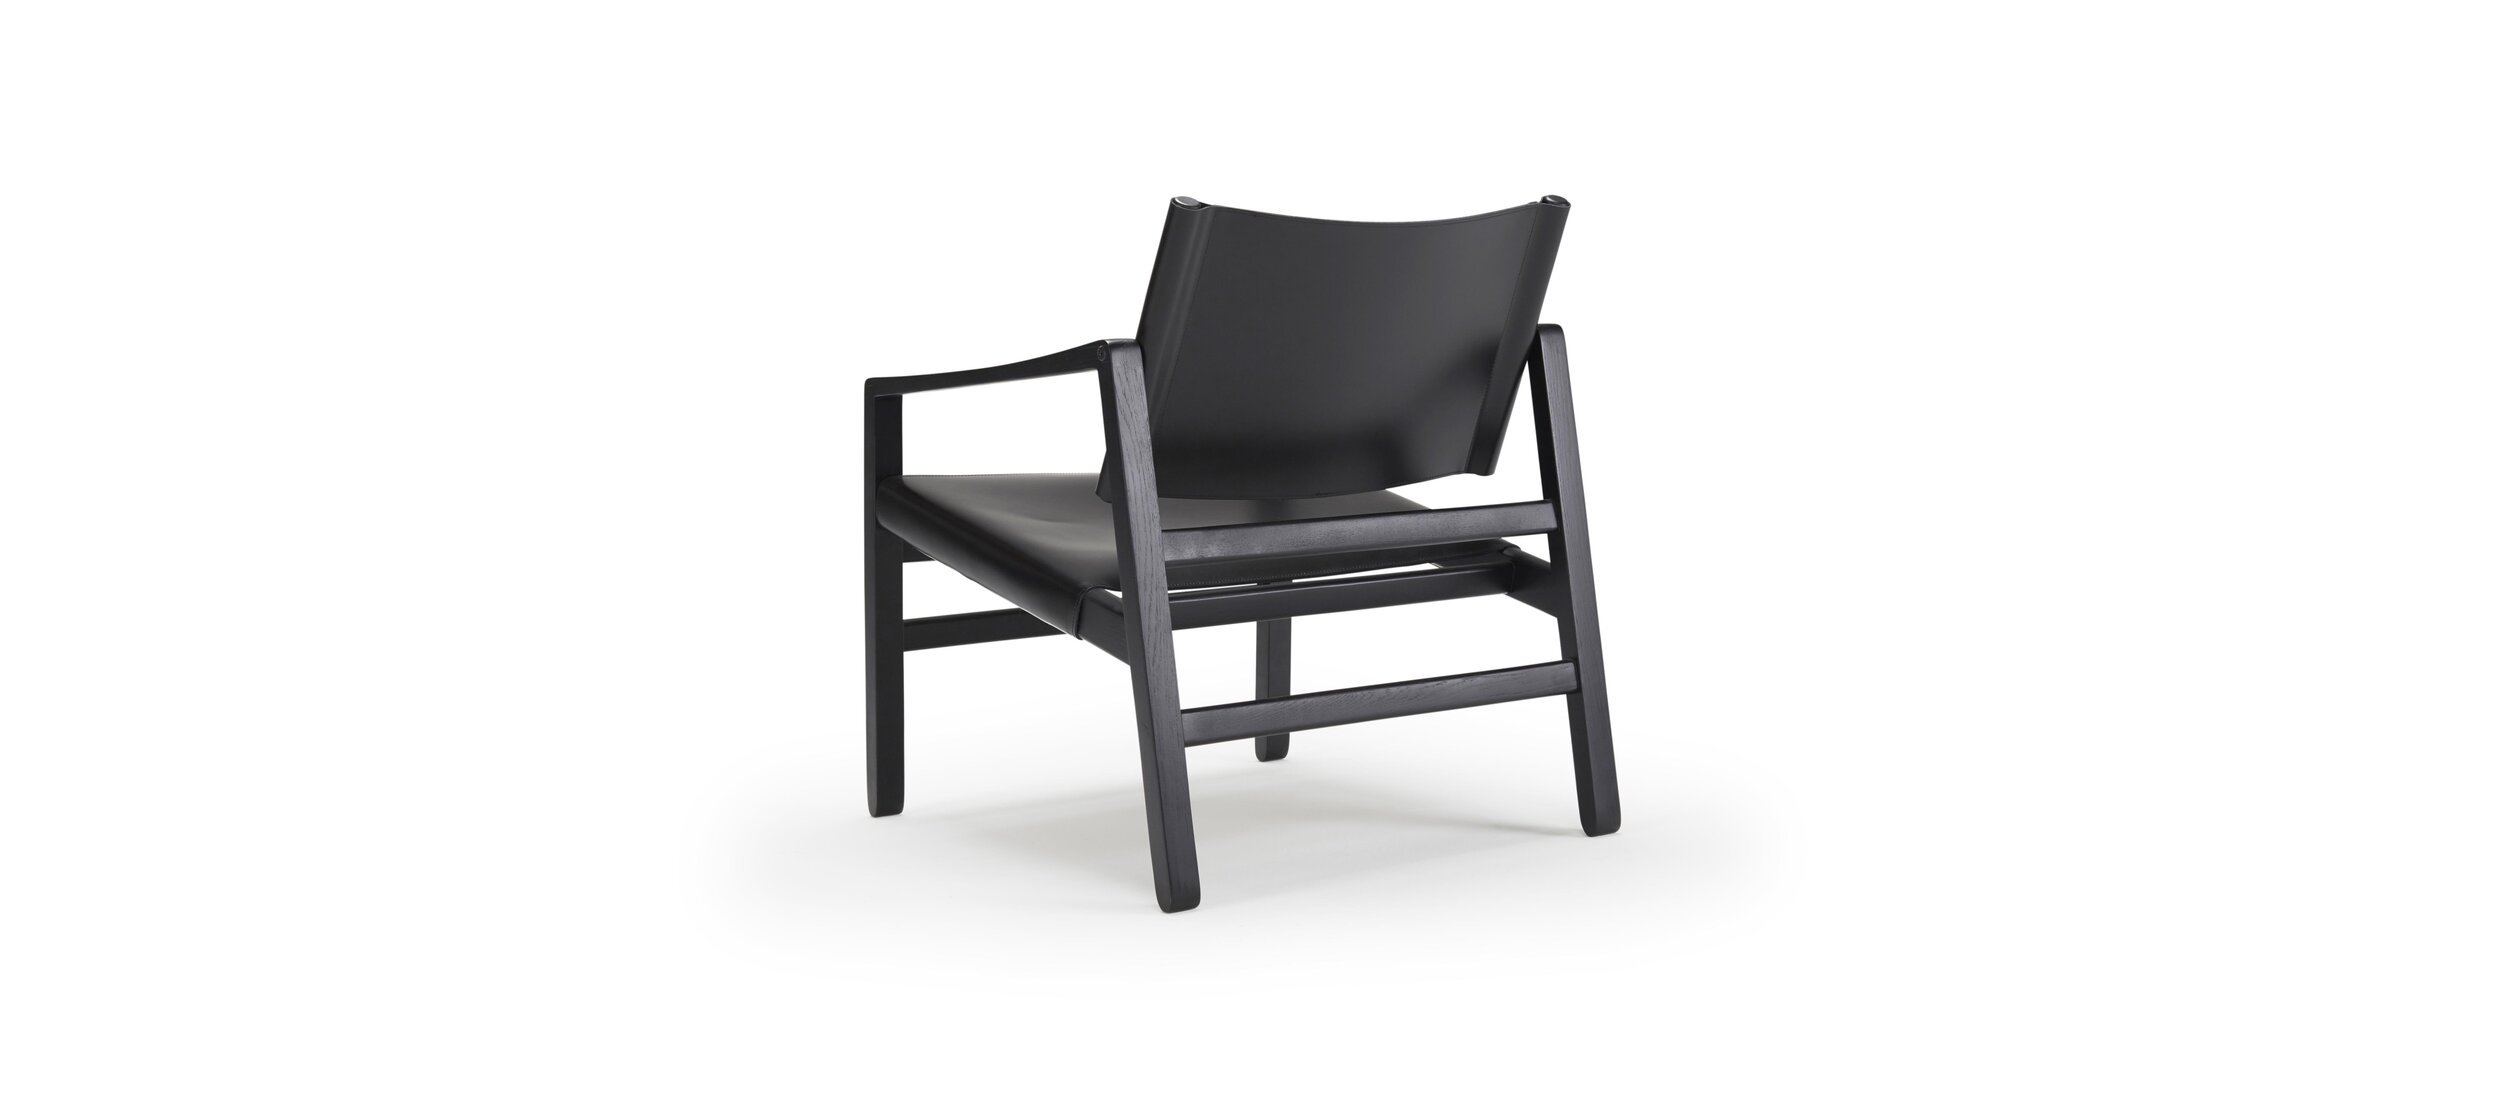 K410-chair-arms-800-black-p4.jpg